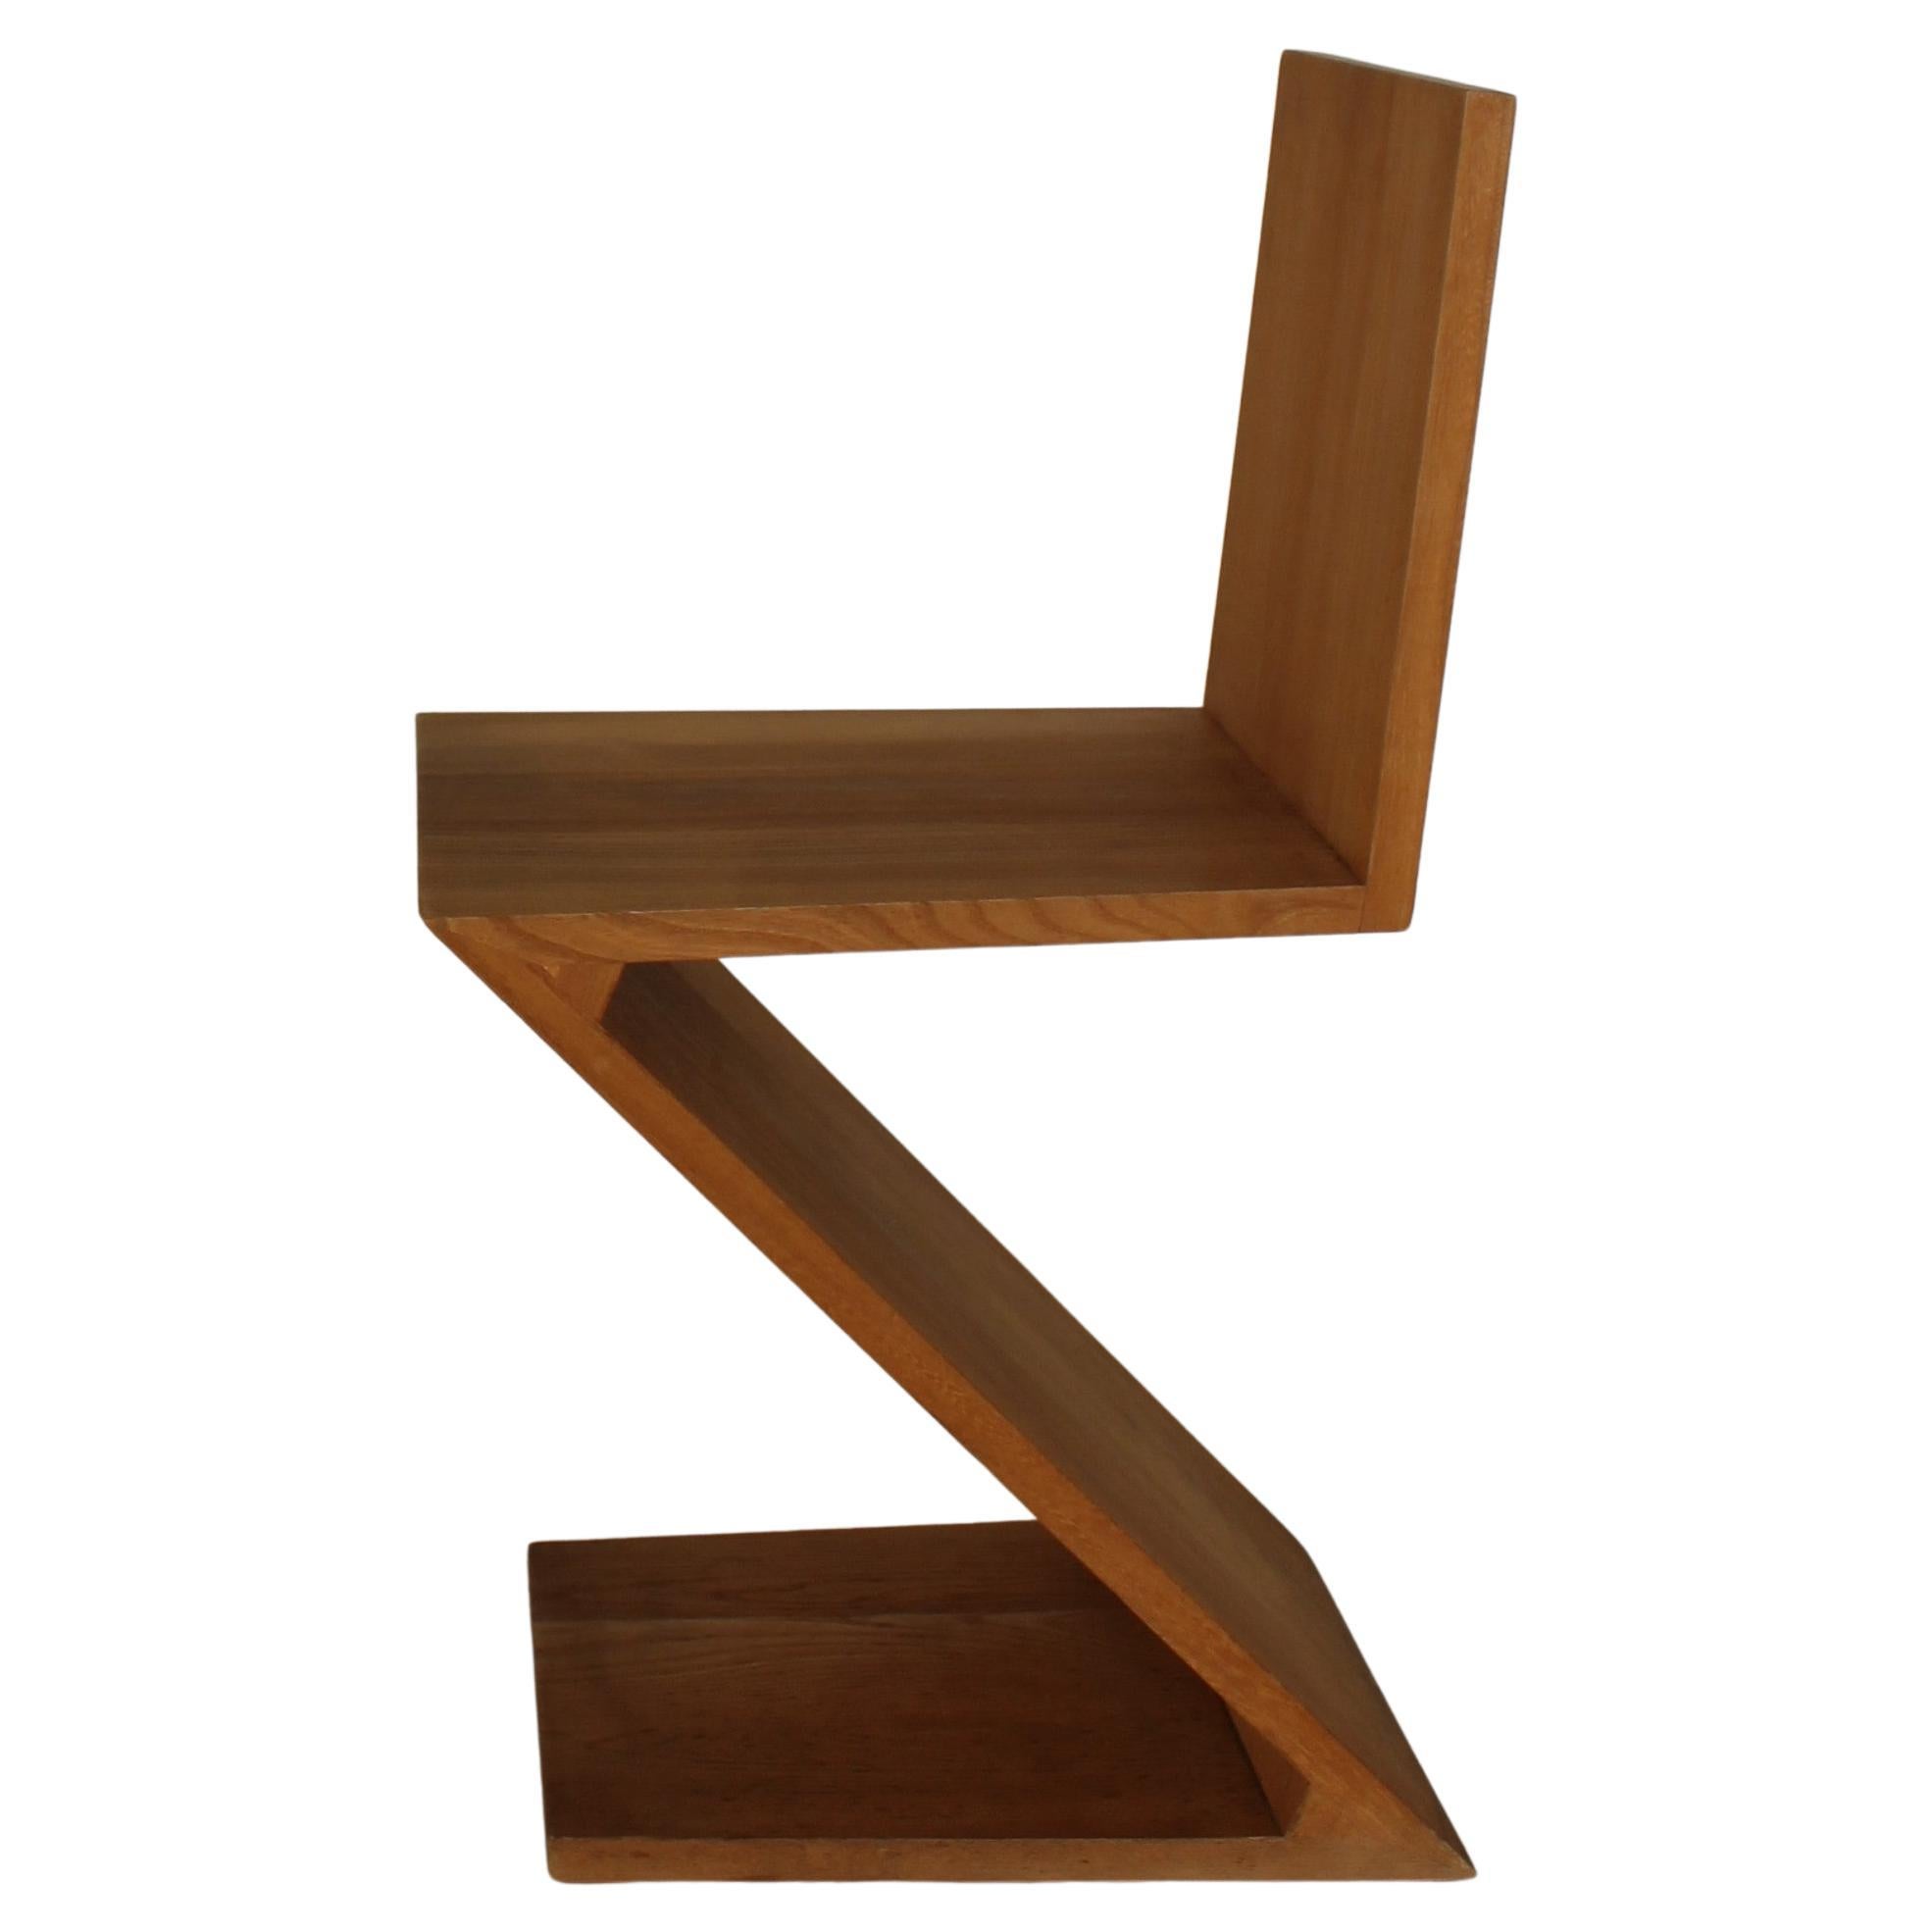  Gerrit Rietveld "Zig-Zag" Chair by Cassina n° 859, Italy 1973 